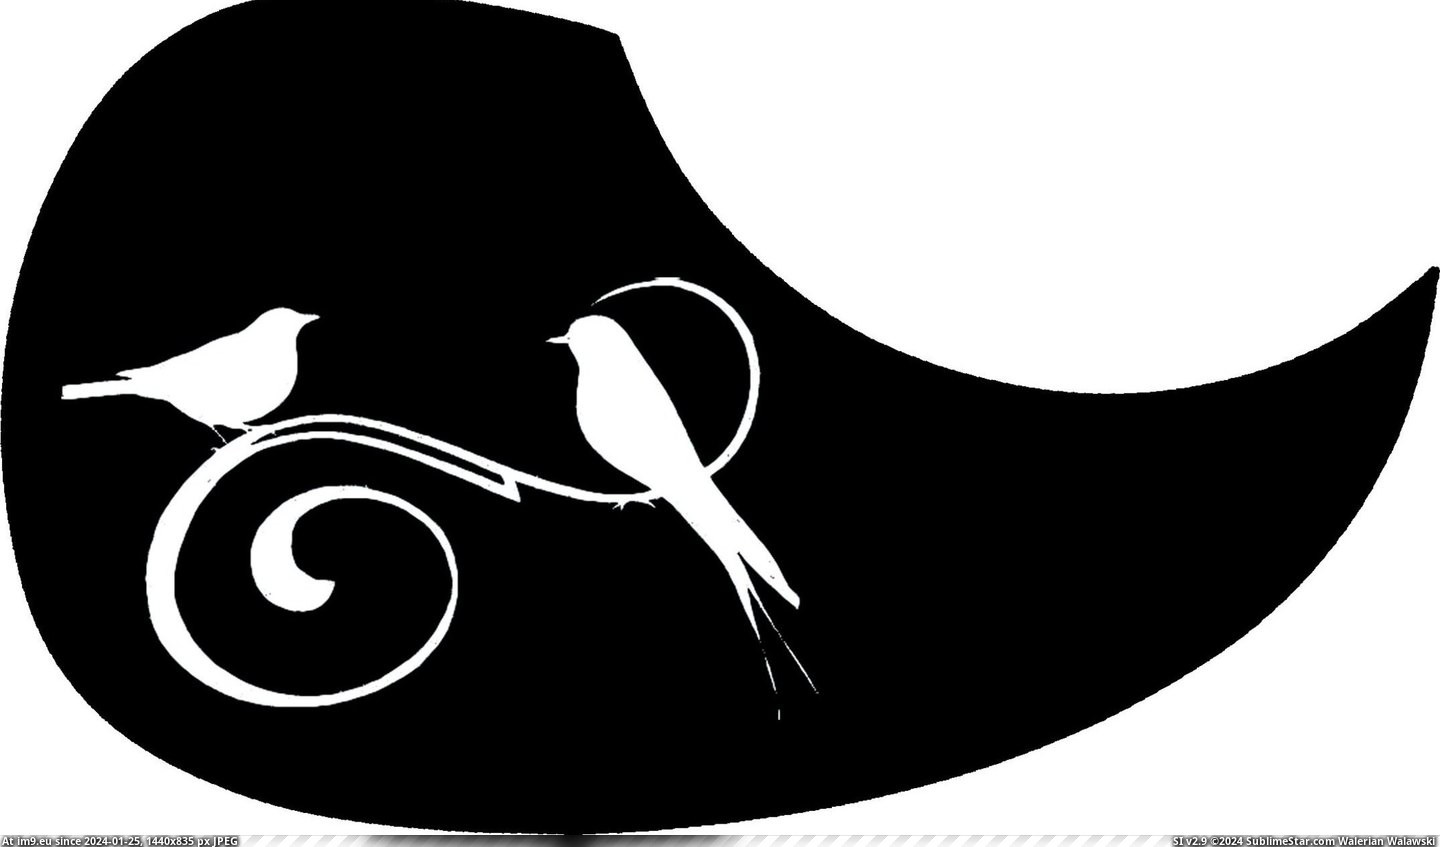 #Pick #Birds #Swirl #Guard Pick Guard - Birds and Swirl Pic. (Изображение из альбом Custom Pickguard Art))